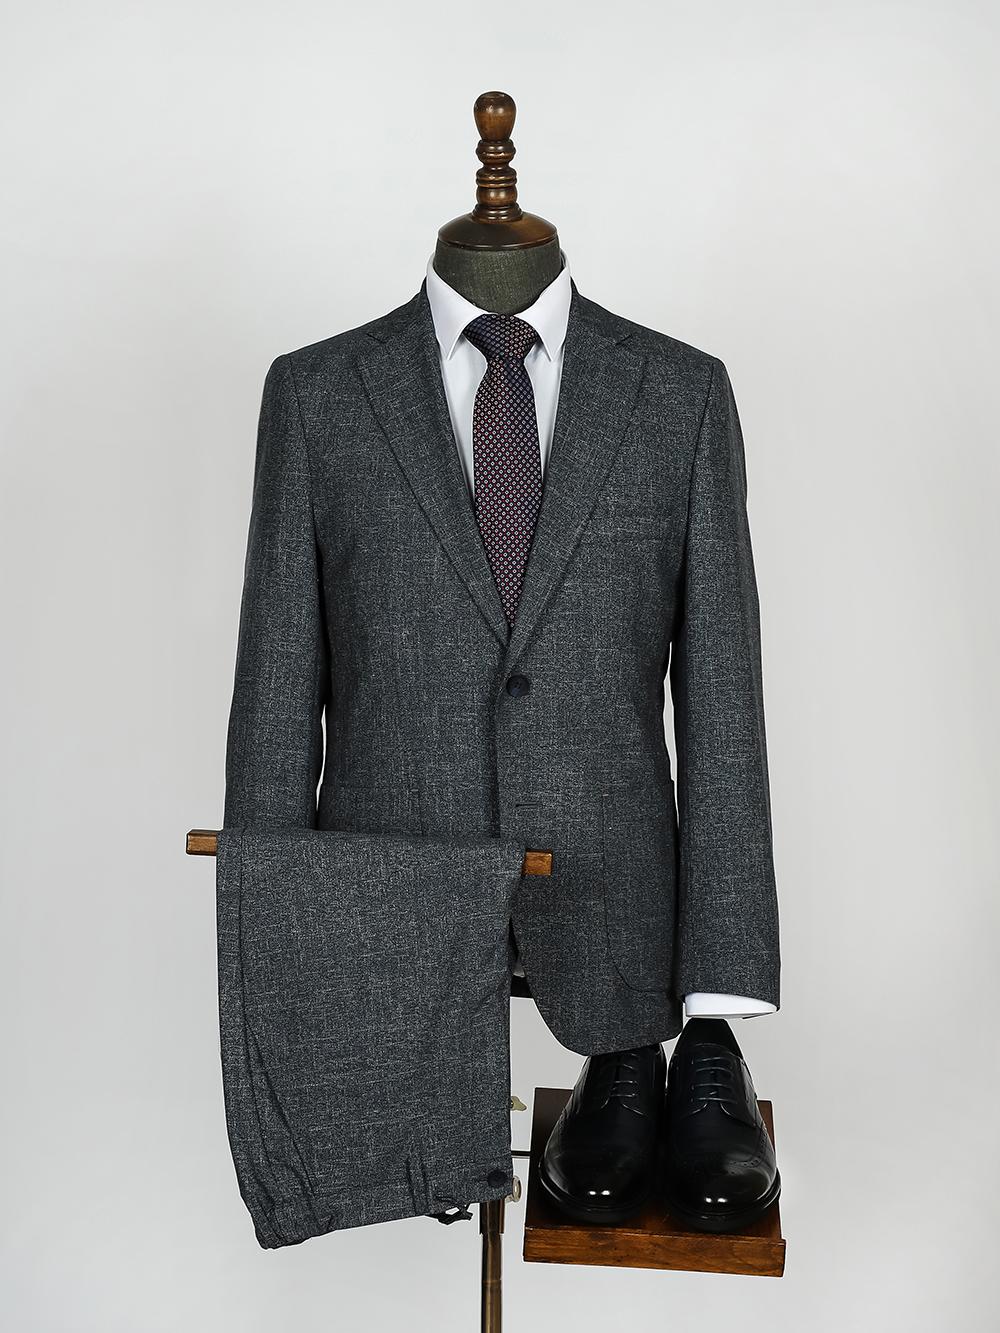 Men's Suit | Custom Made to Measure Suit |Grand Rapids